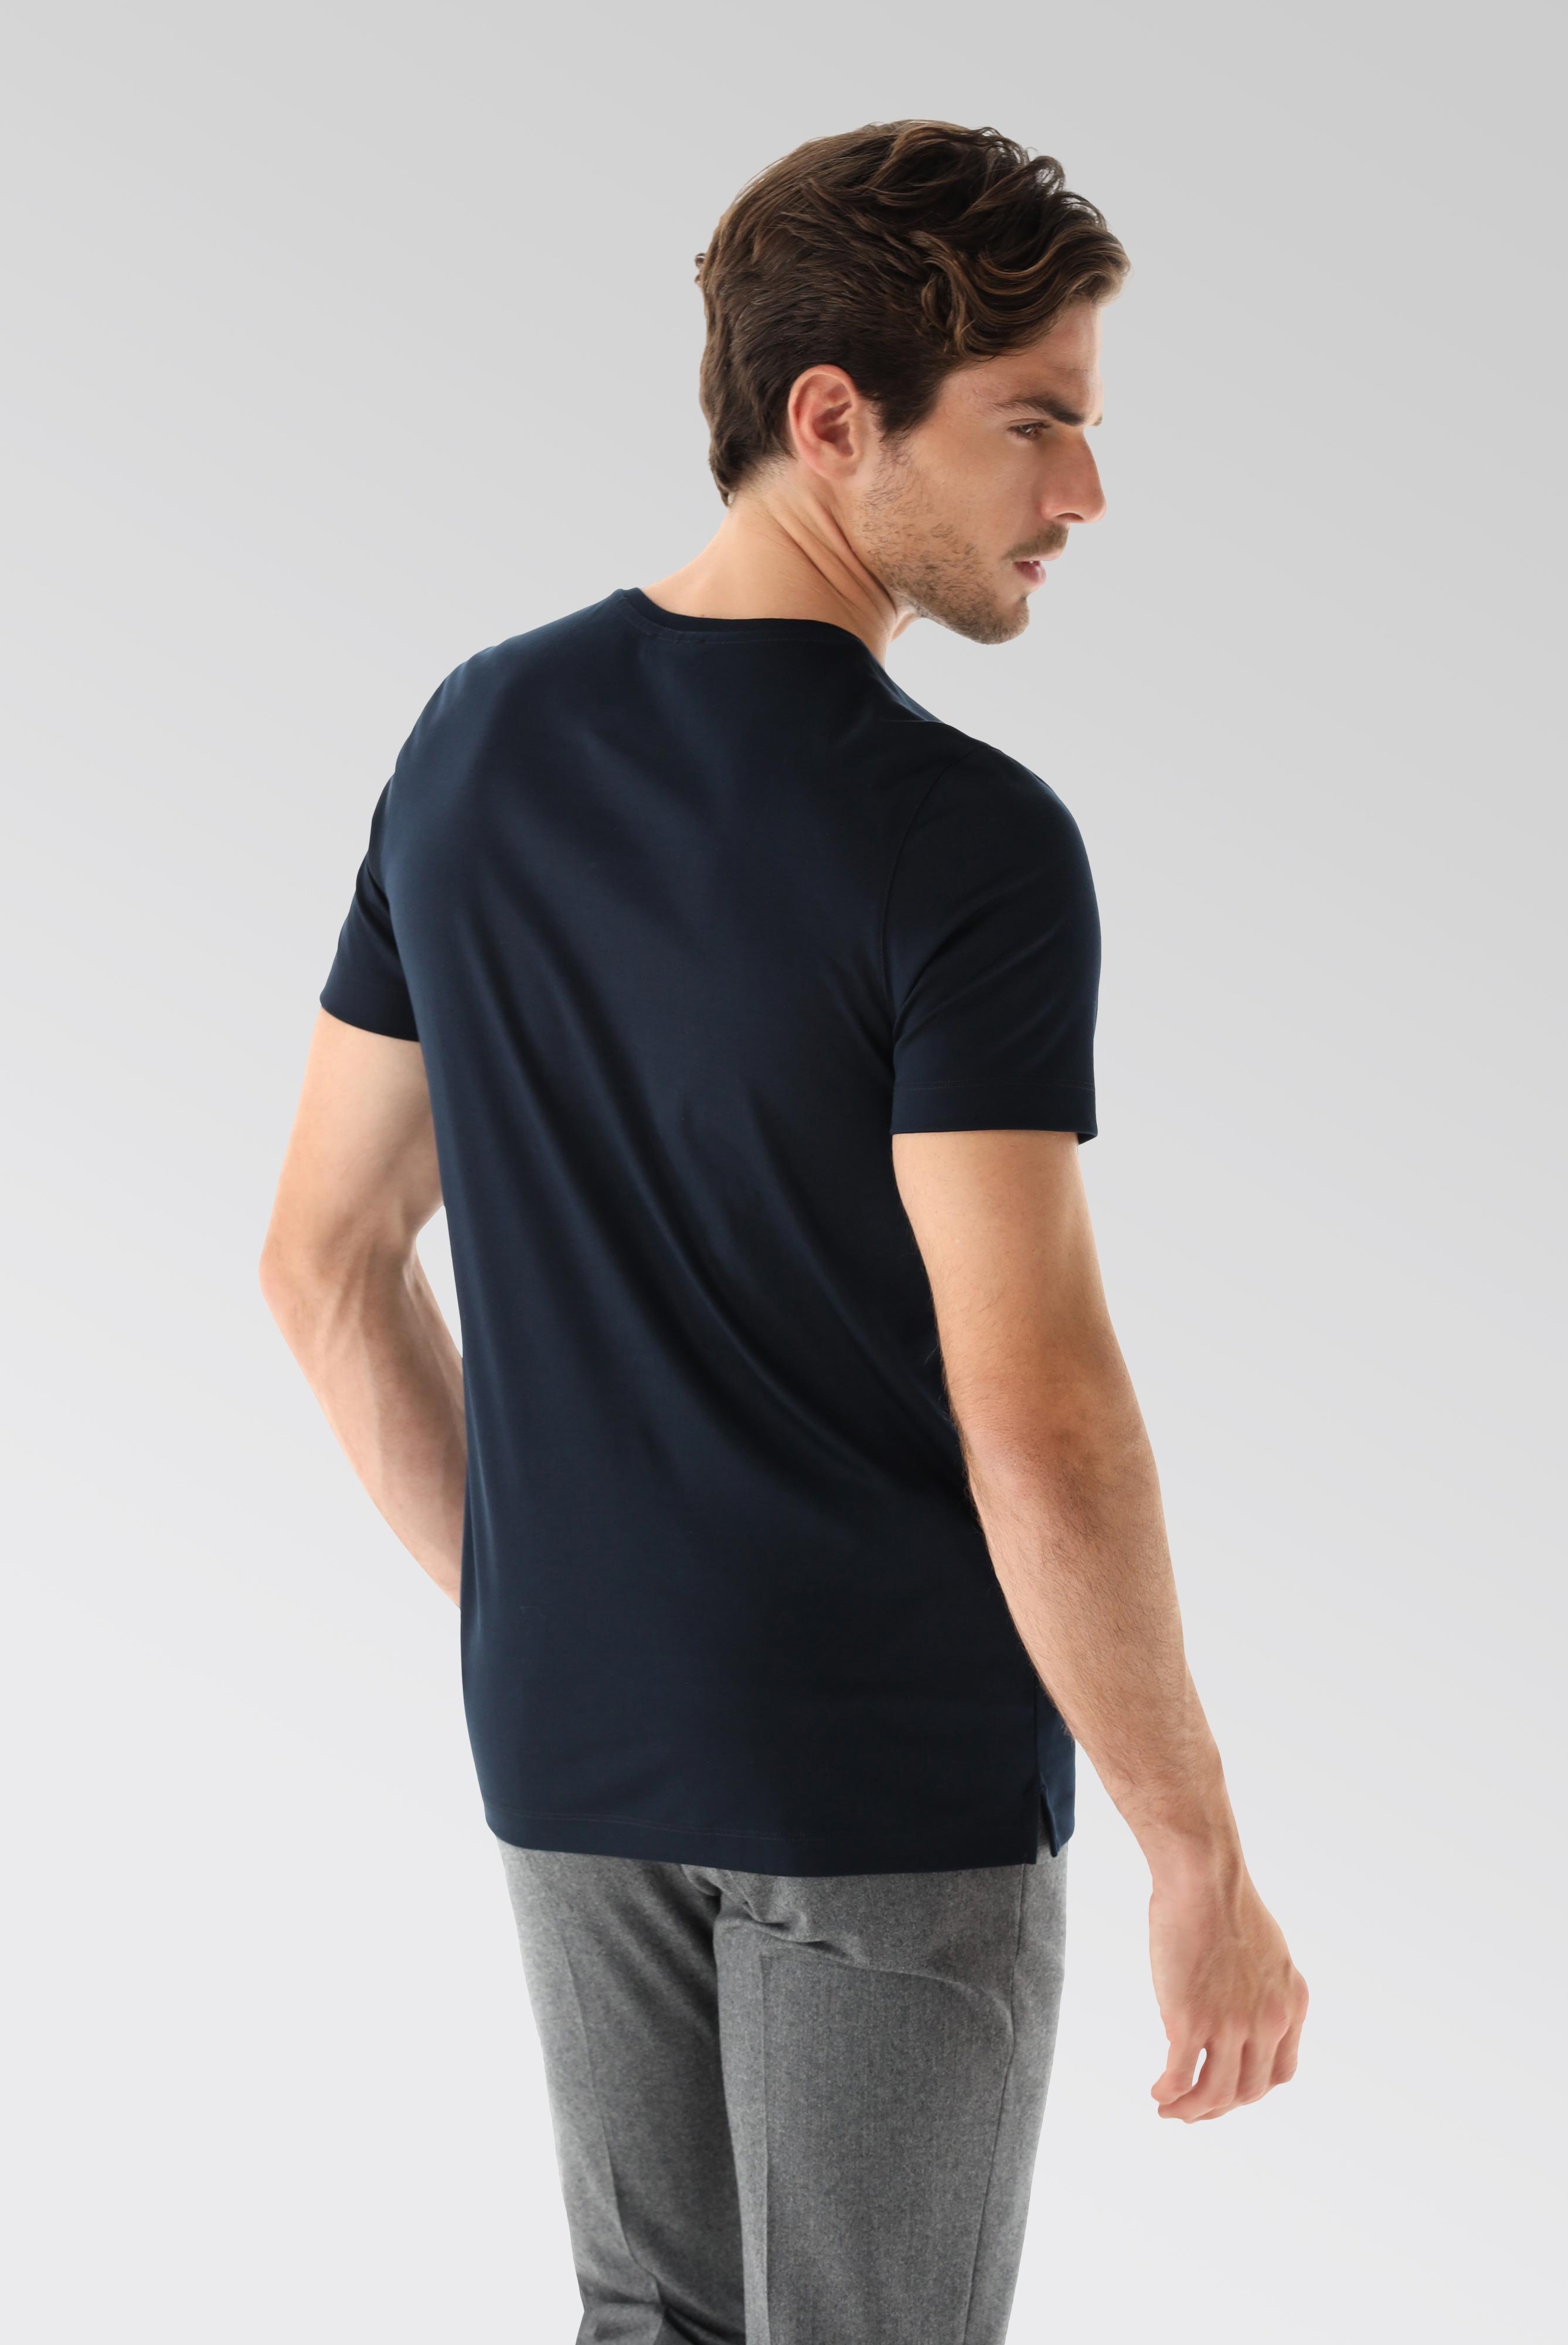 T-Shirts+Swiss Cotton Jersey V-Neck T-Shirt+20.1715.UX.180031.790.L